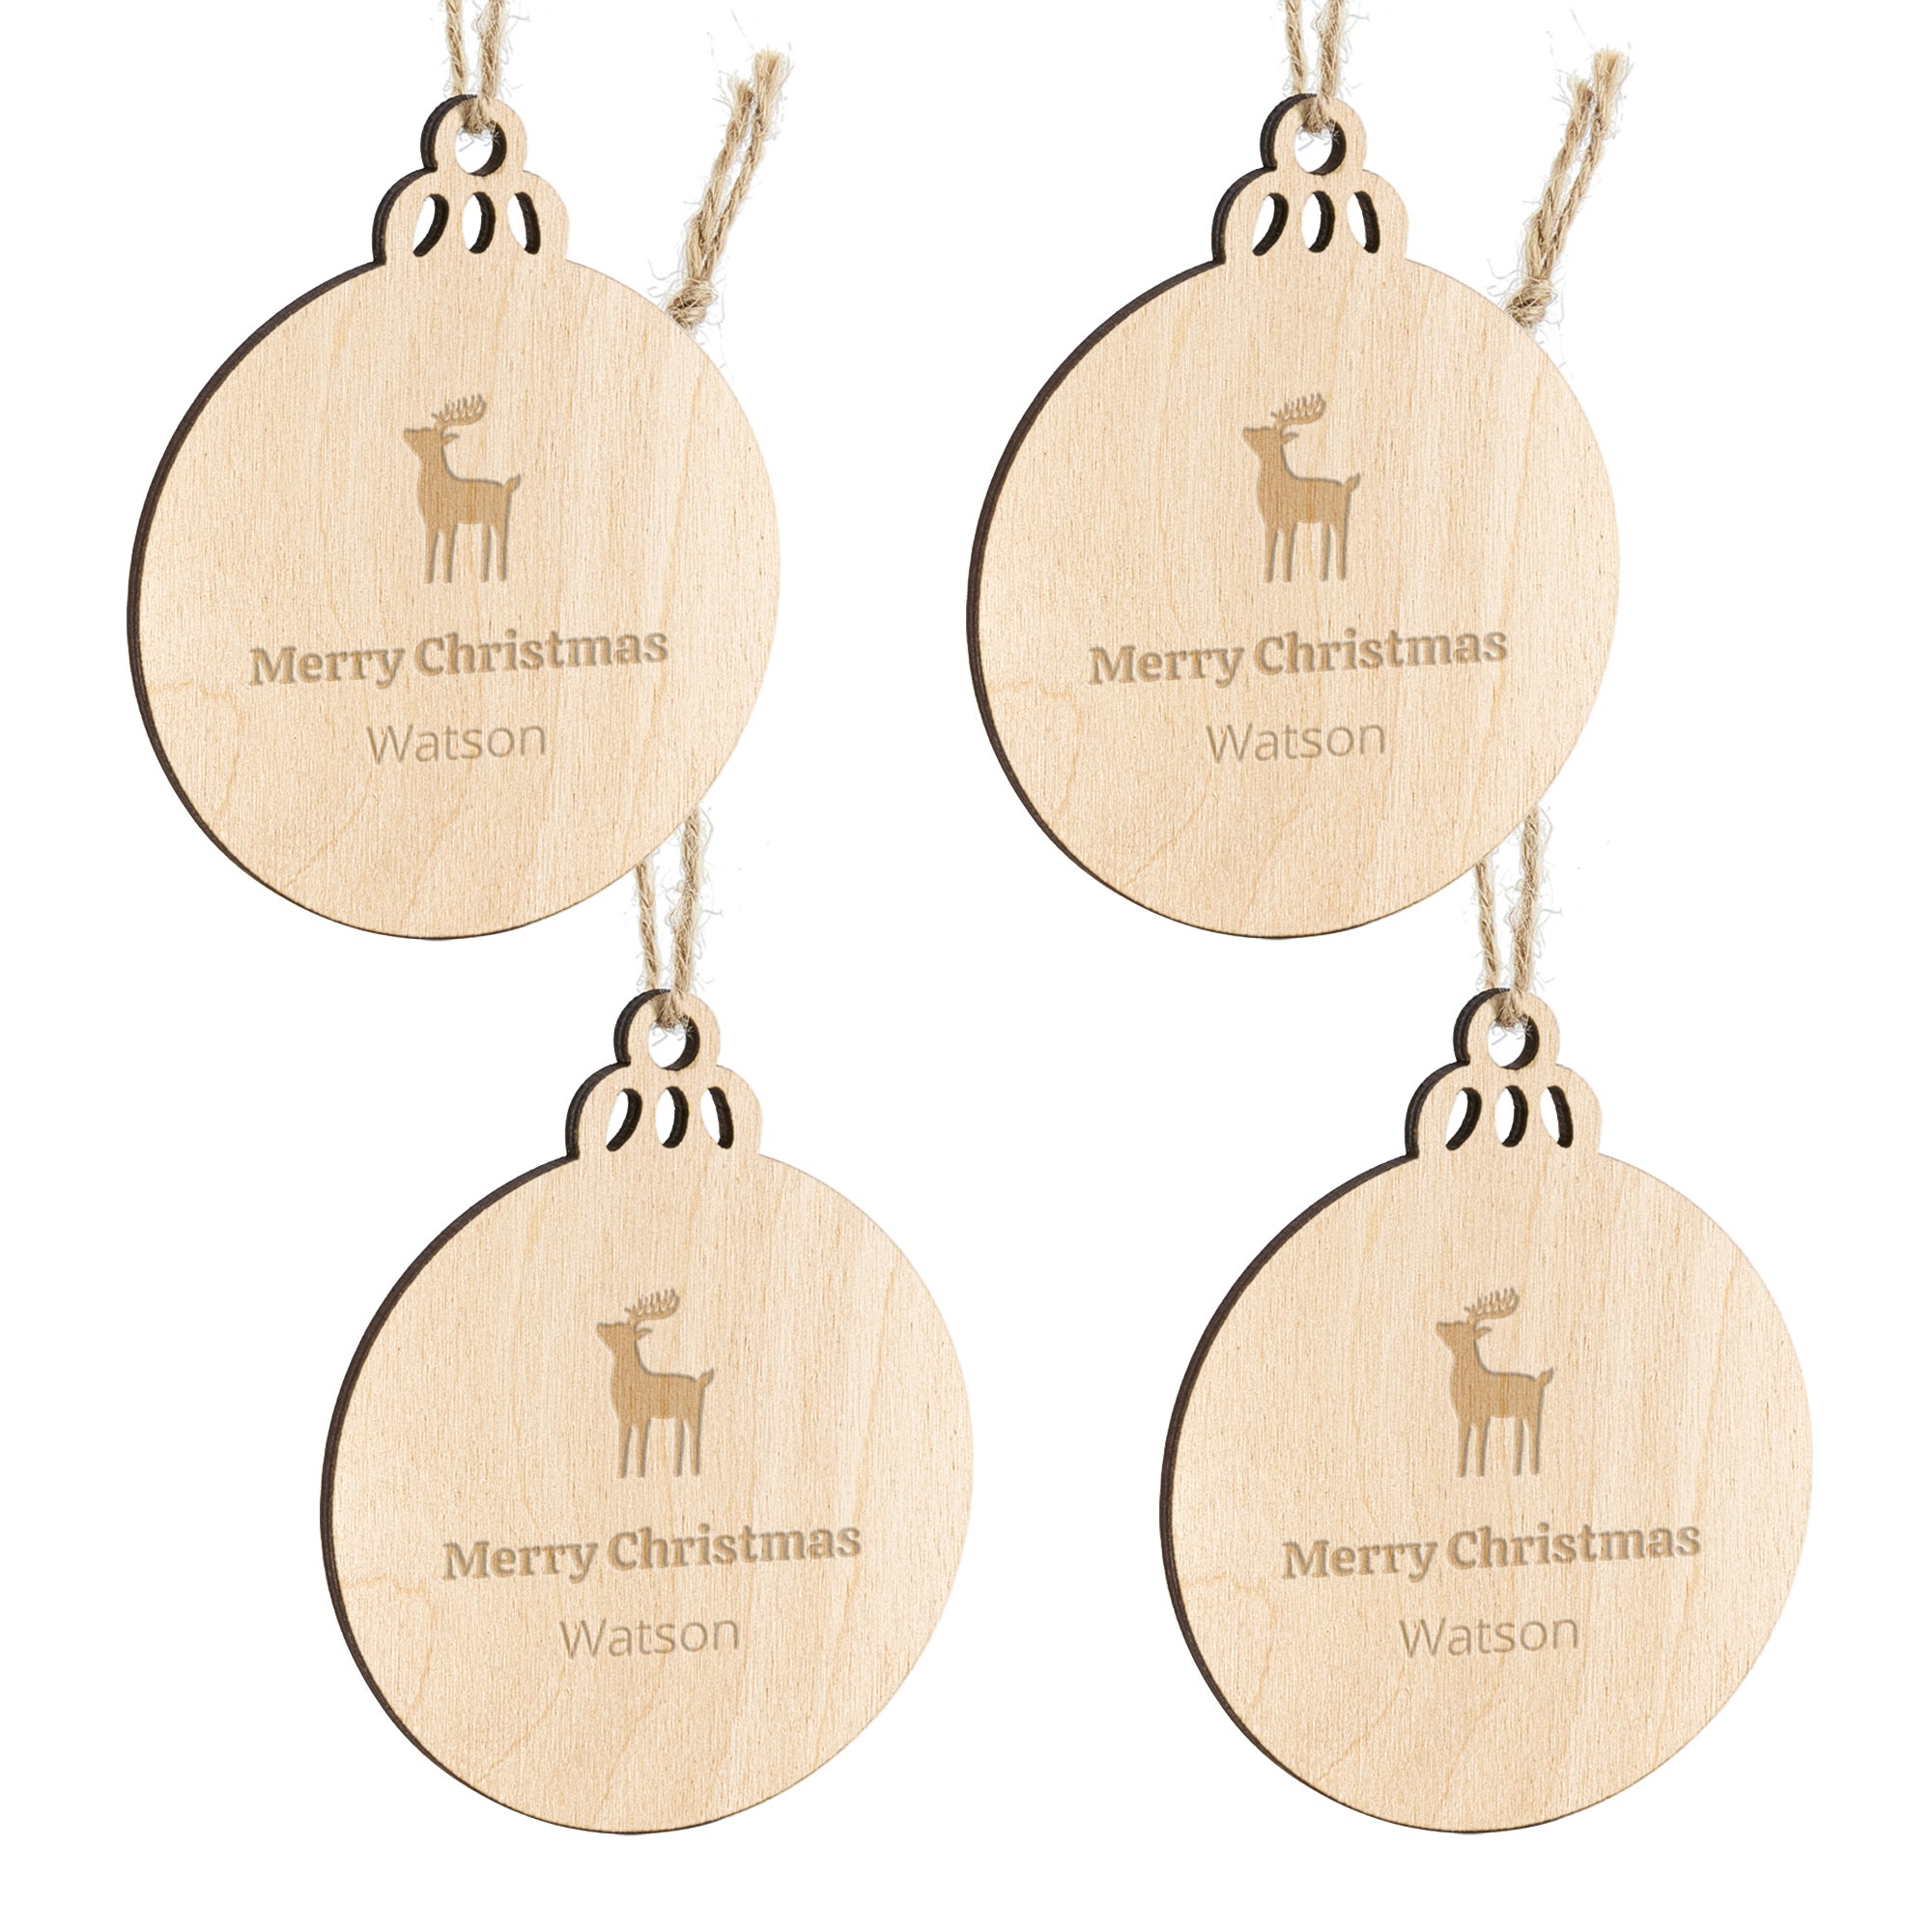 Personalised Christmas decorations - Wood - Engraved - Circle - 4 pcs